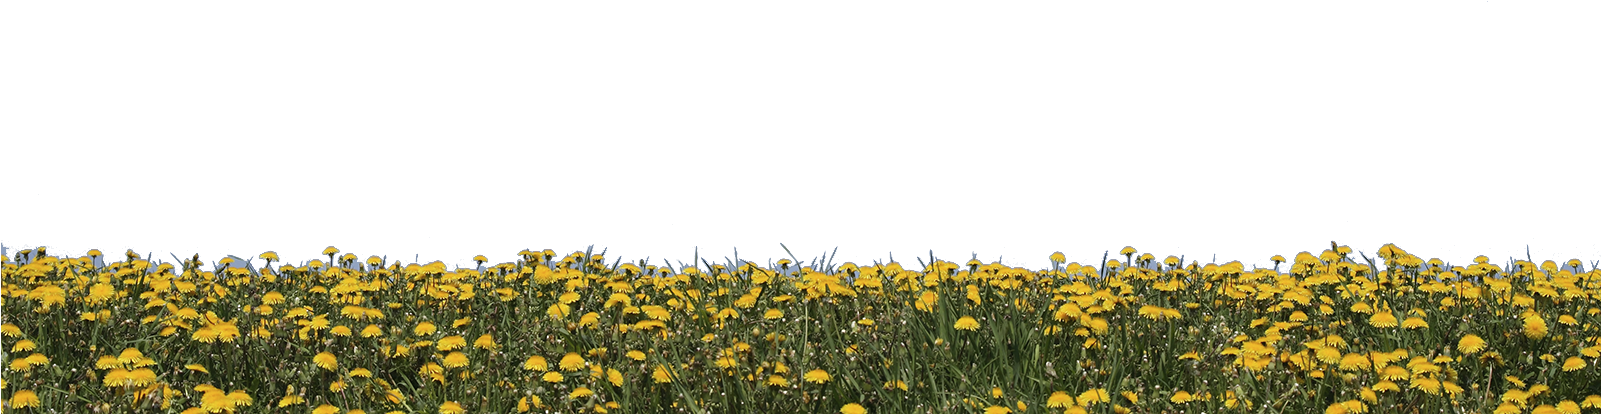 Vibrant Yellow Dandelion Field